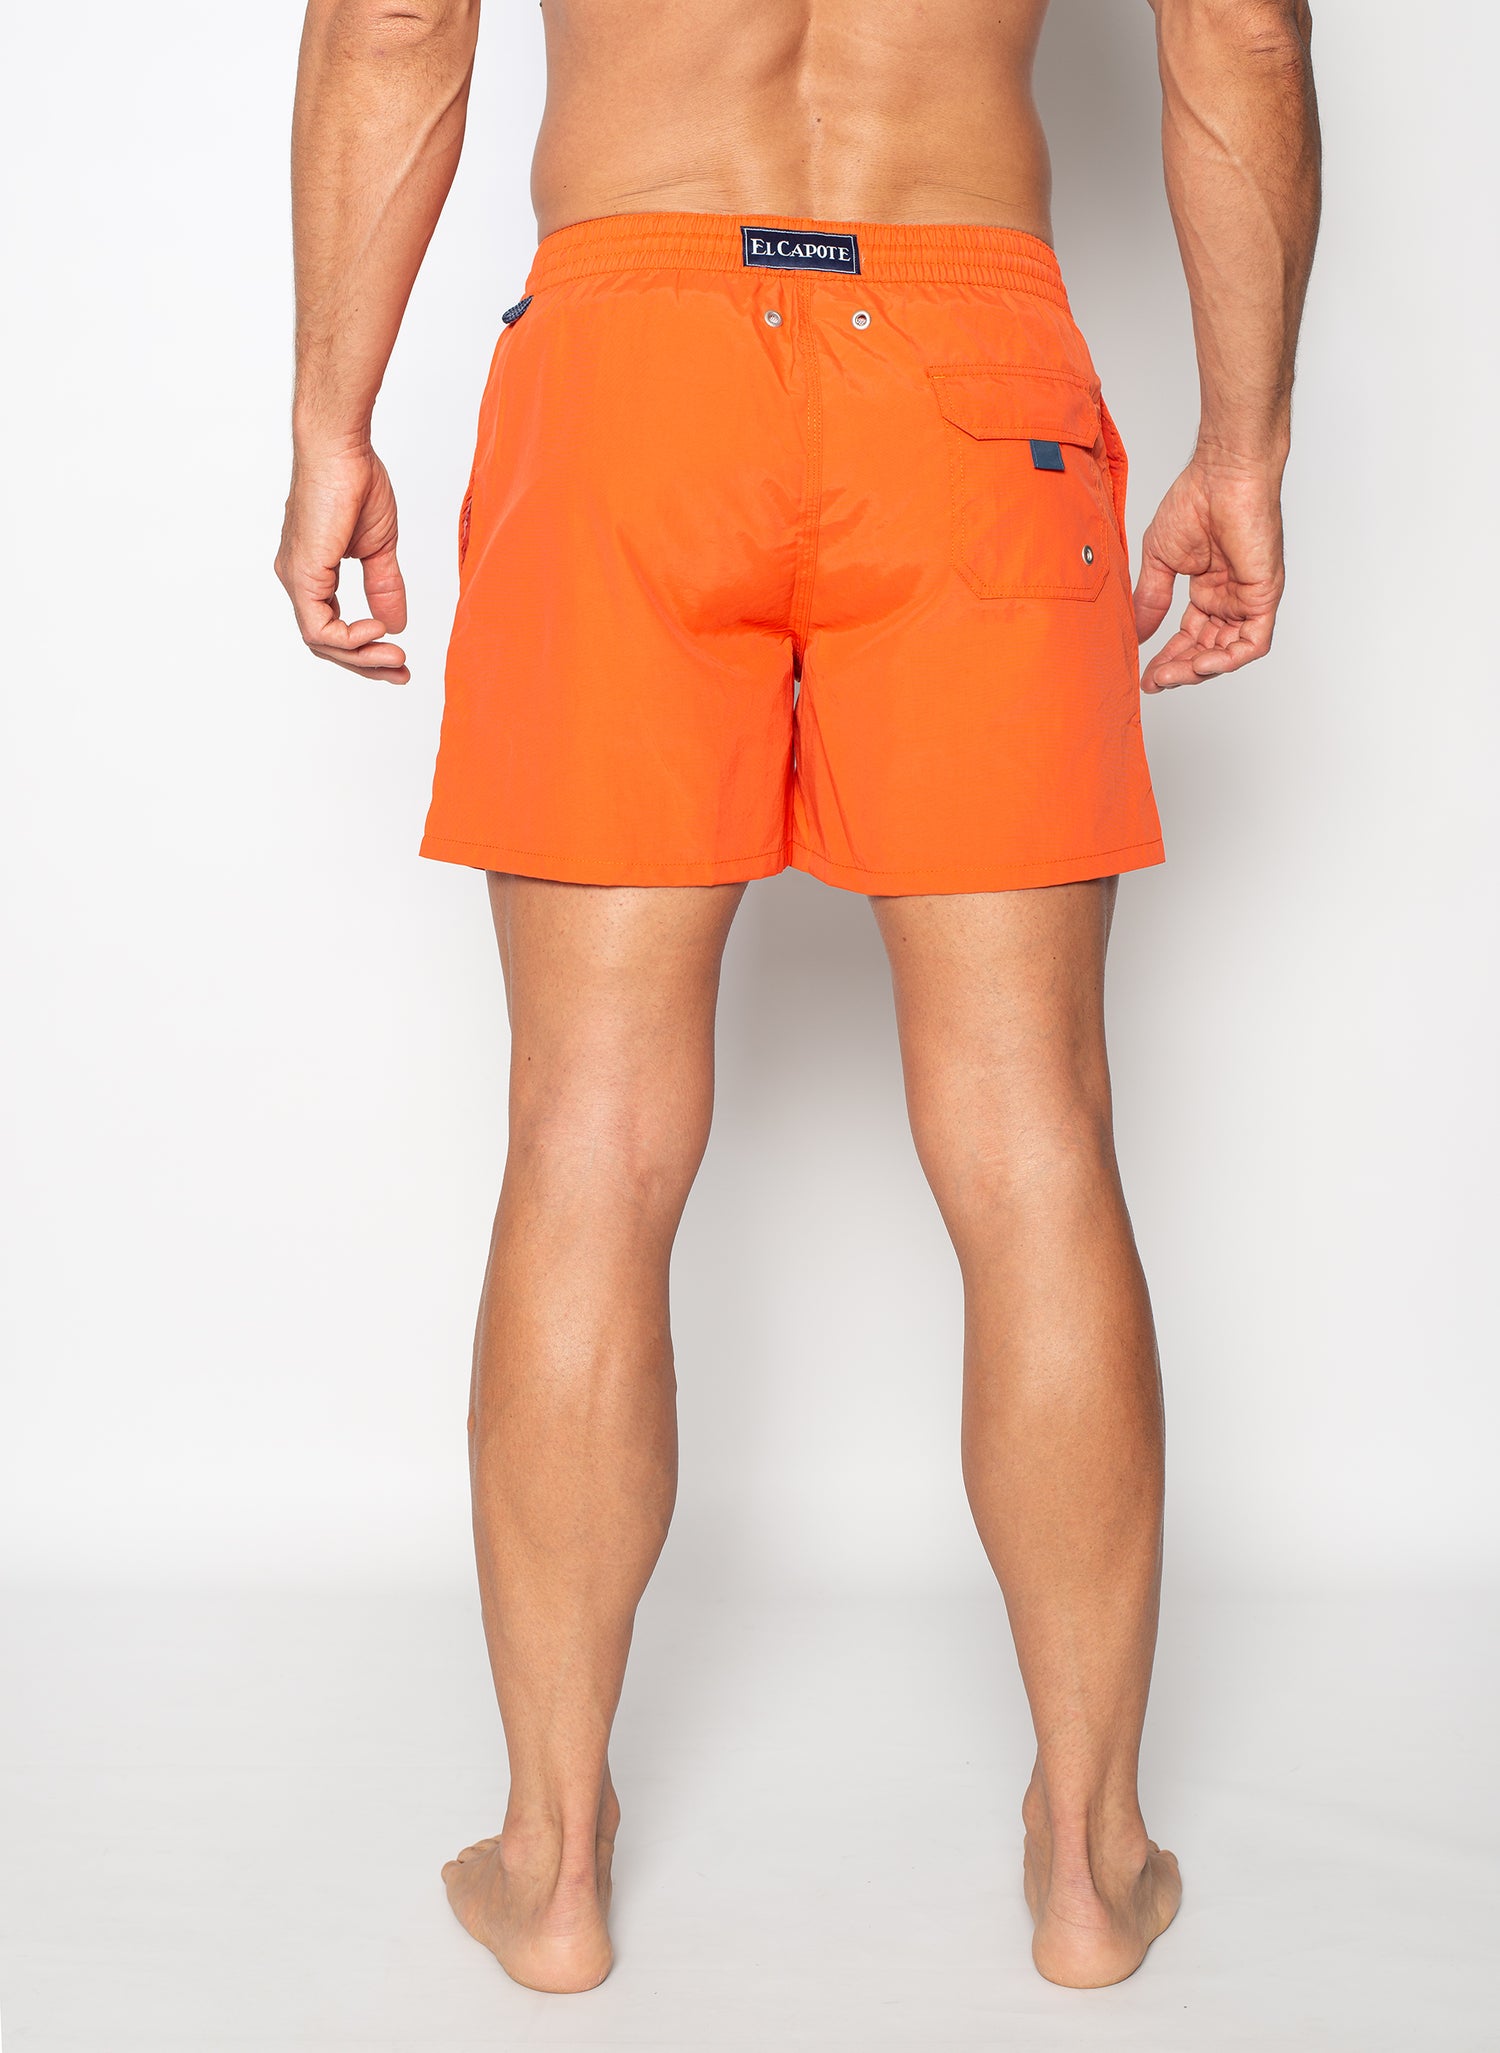 Orange swimsuit details Navy Blue Man